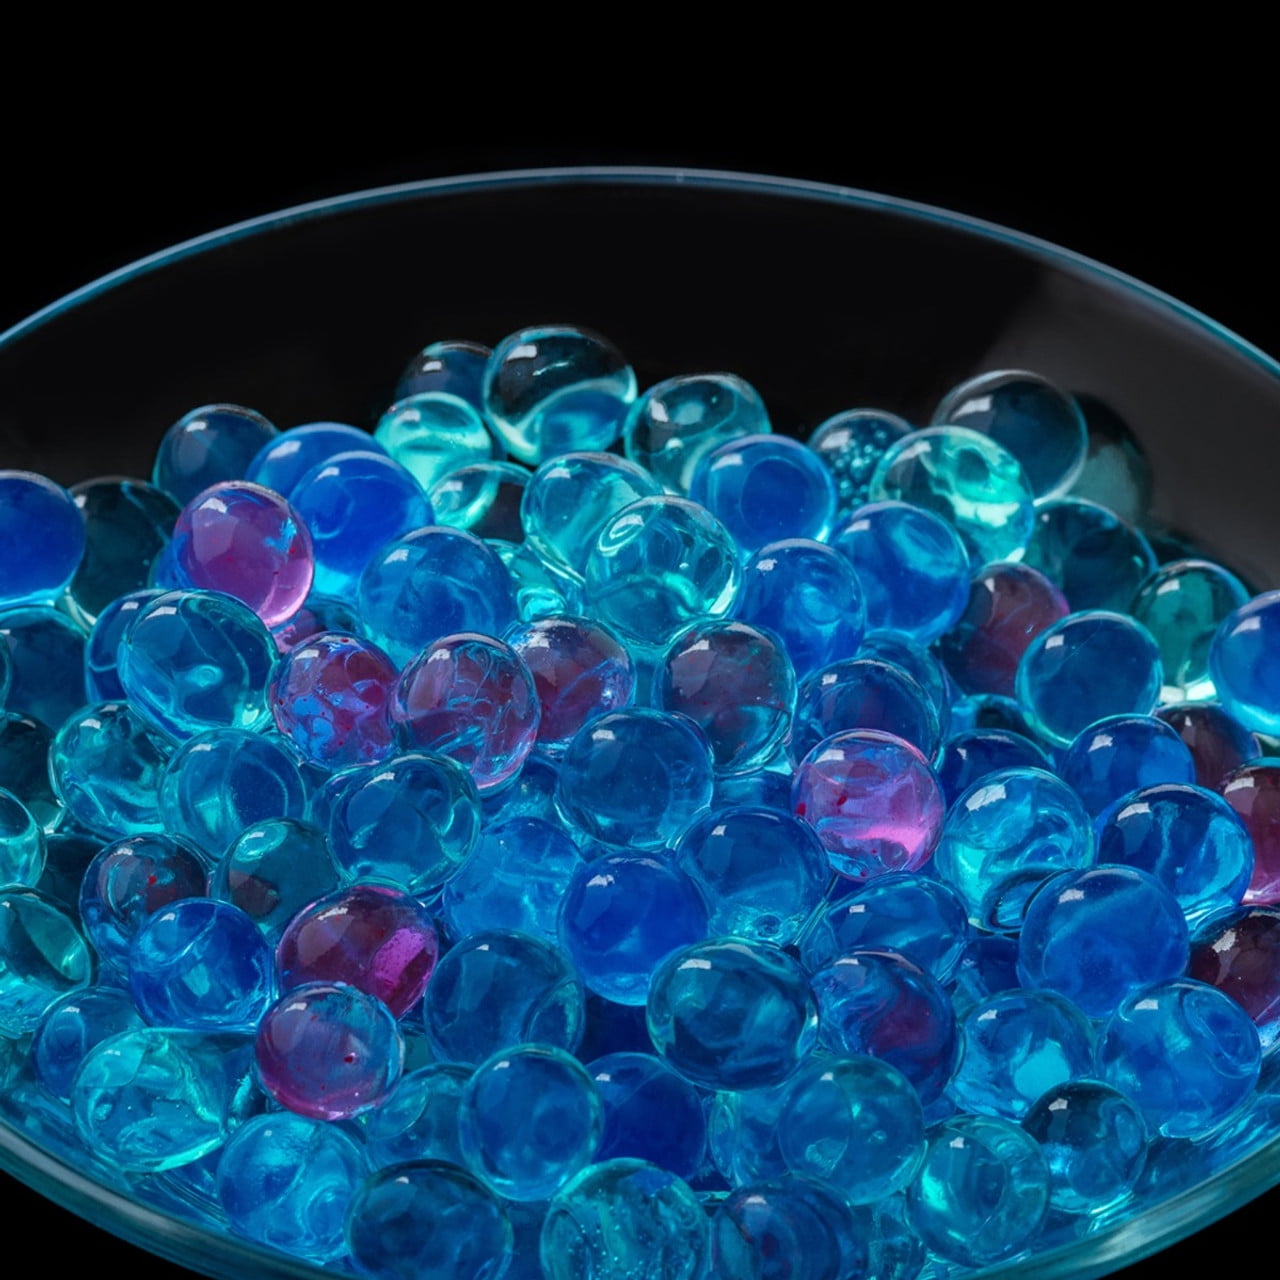 On Sale Water Beads Orbiz Growing Balls Clear Multi Crystal Soil